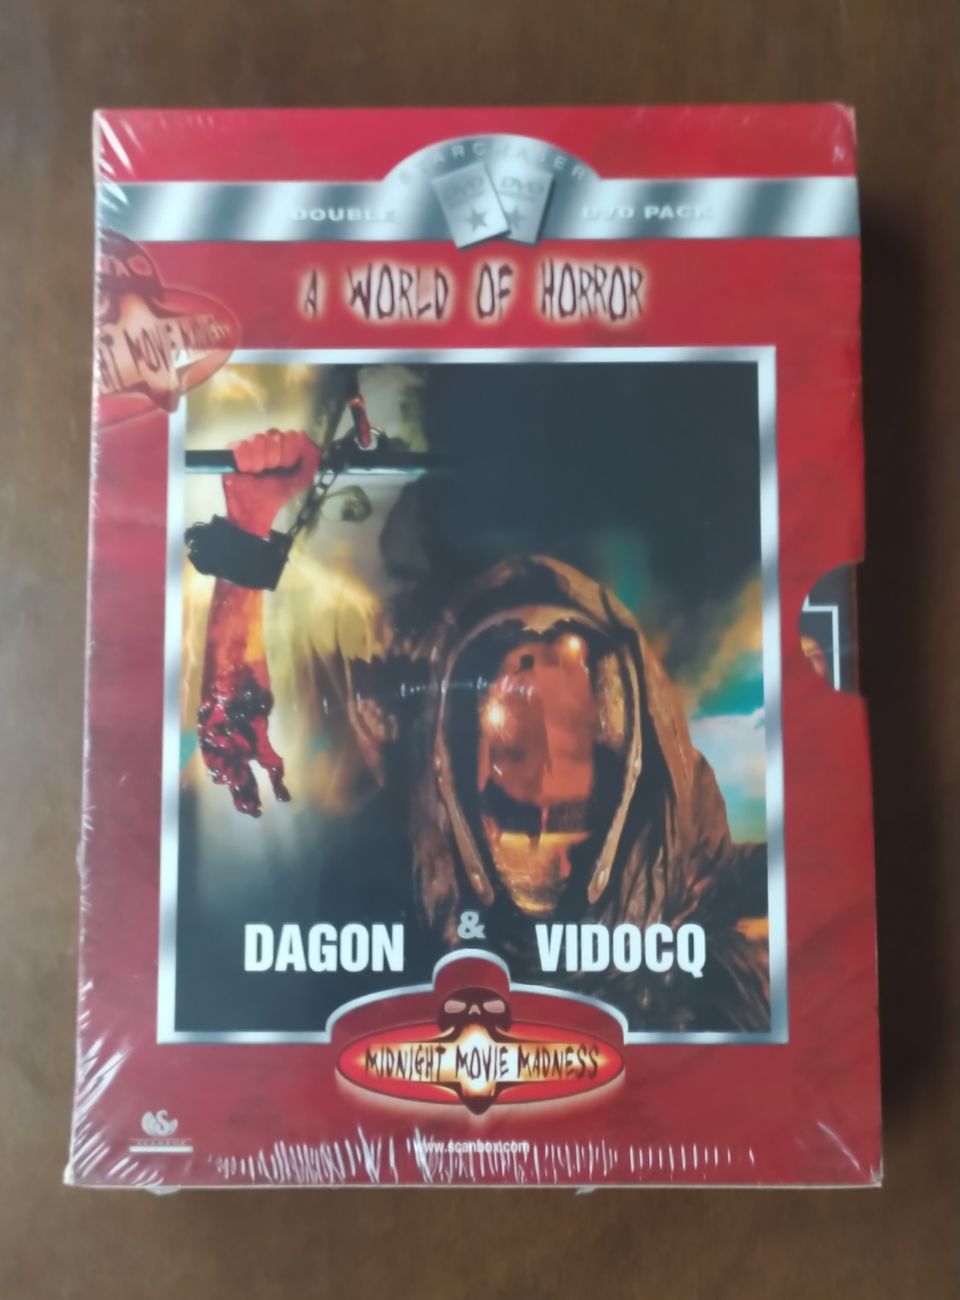 A World of Horror Dagon & Vidocq DVD (UUSI)